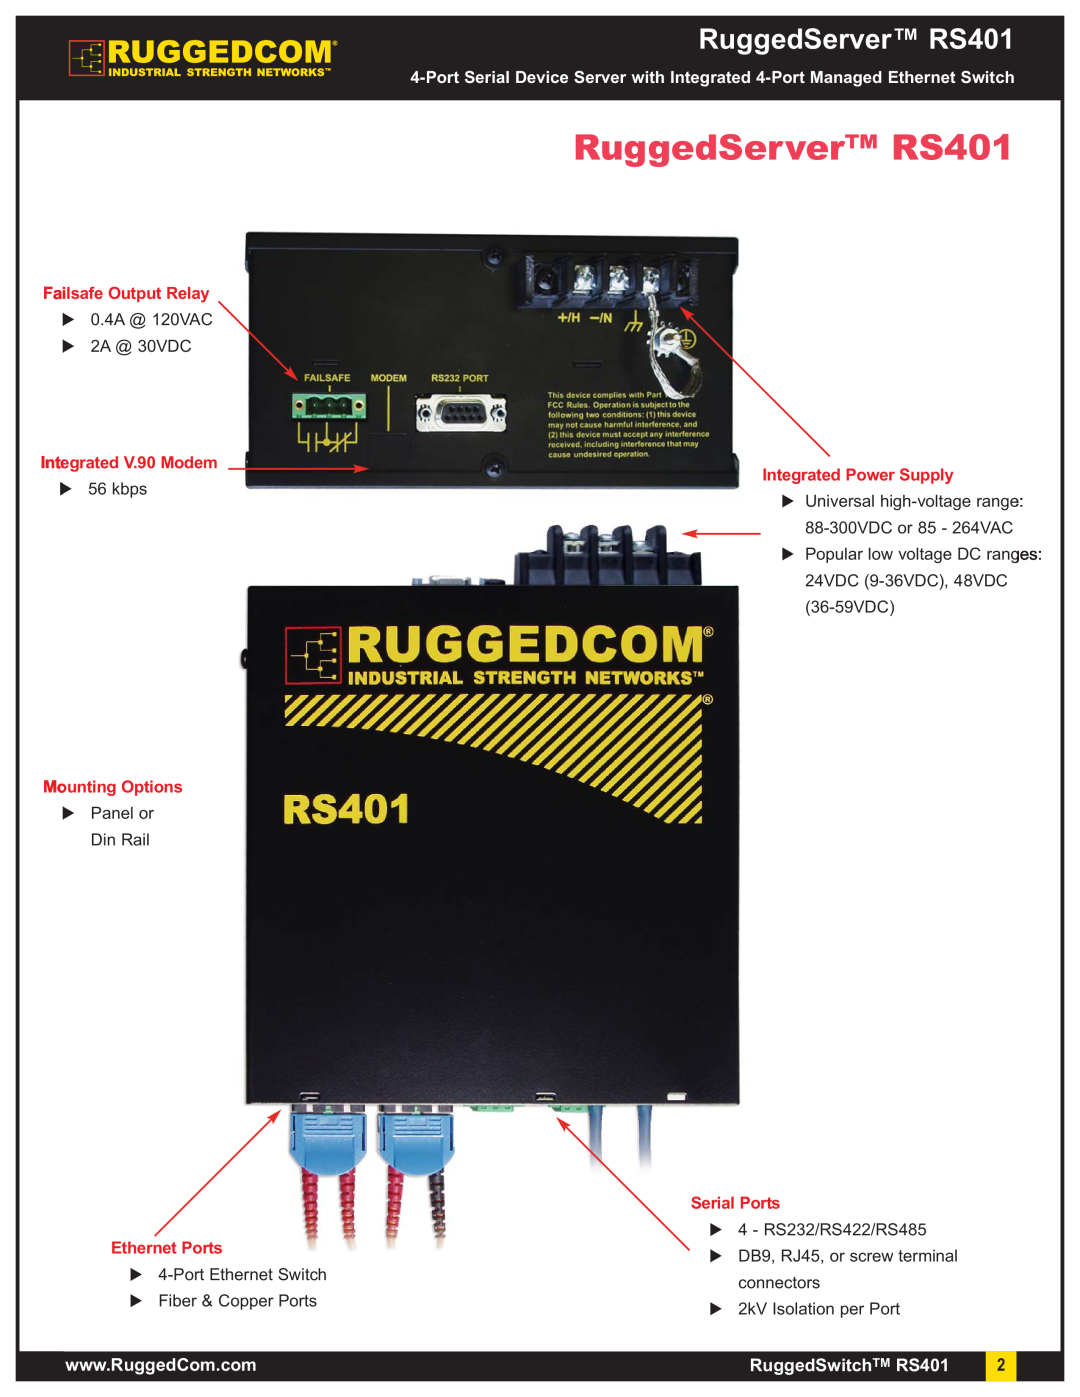 RuggedCom warranty RuggedServer RS401, Failsafe Output Relay, Integrated V.90 Modem, Mounting Options, Ethernet Ports 